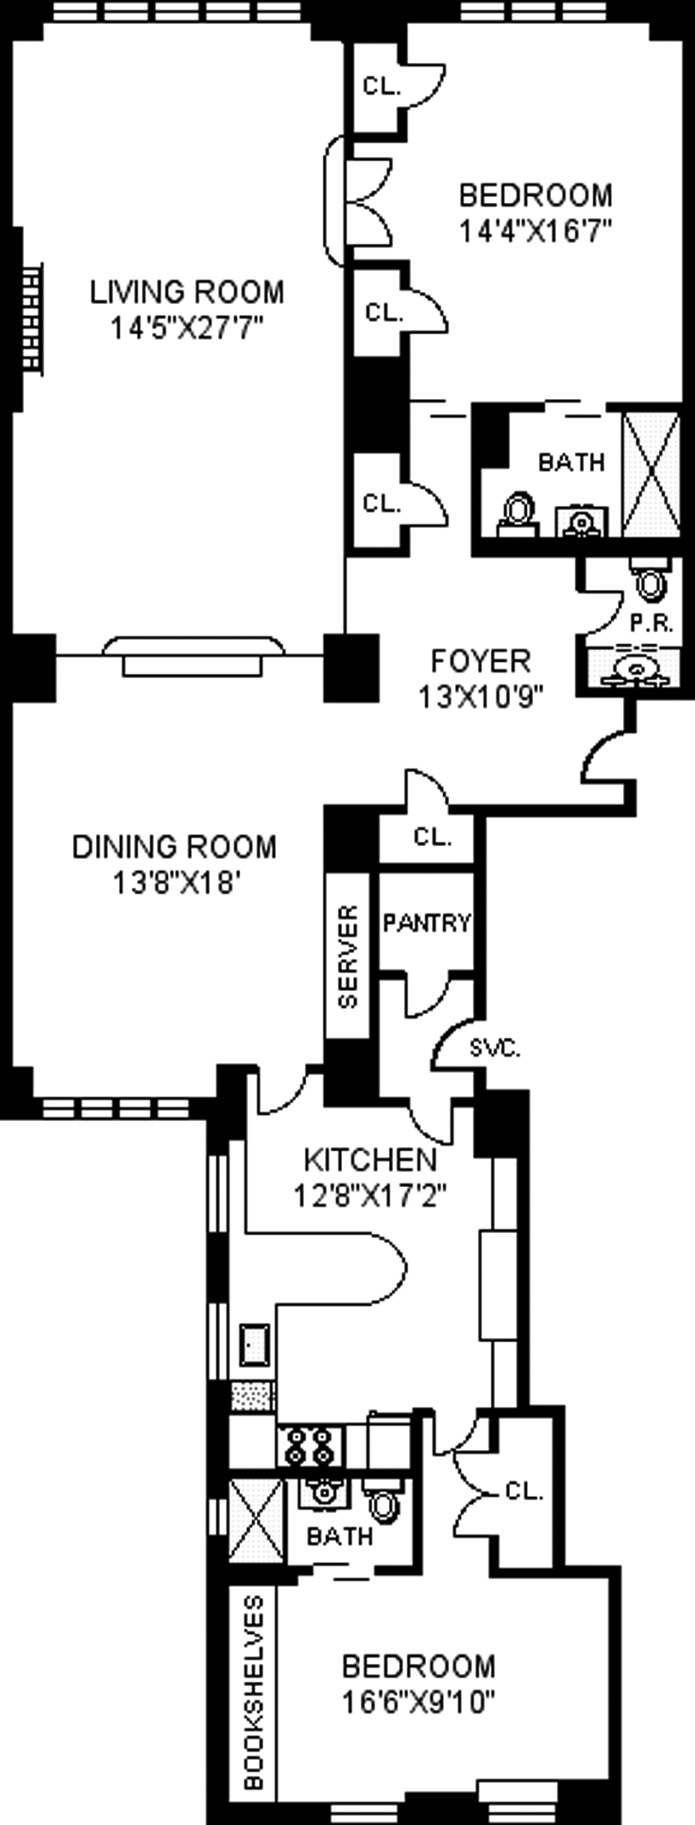 Floorplan for 116 East 68th Street